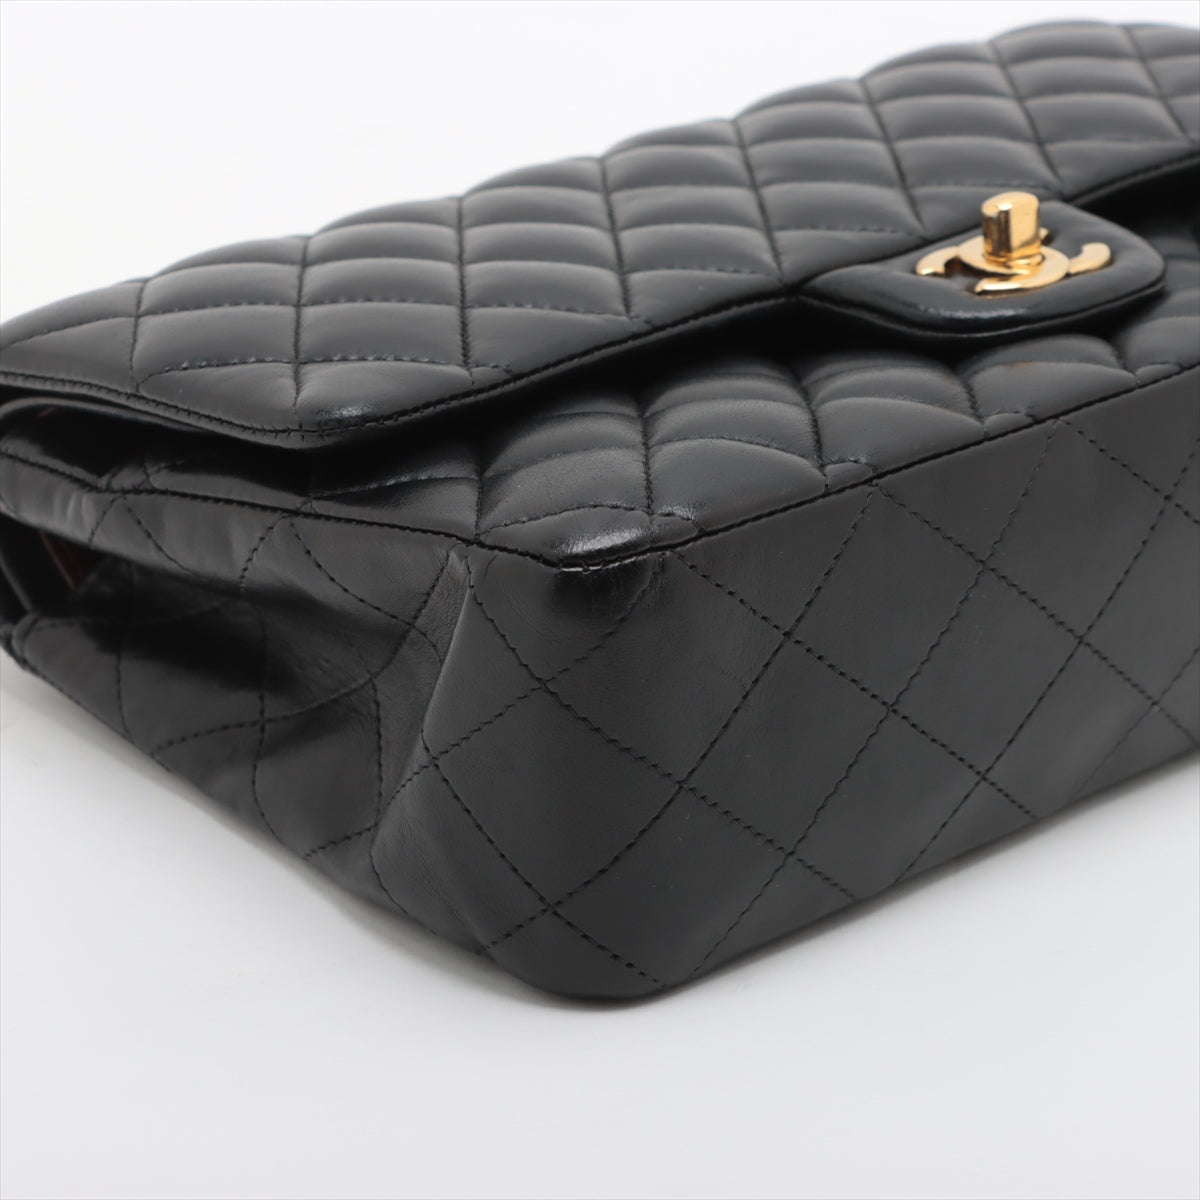 Chanel Matelasse 25 Lambskin Double Flap Double Chain Bag Black Gold Metal Fittings 18XXXXXX A01112